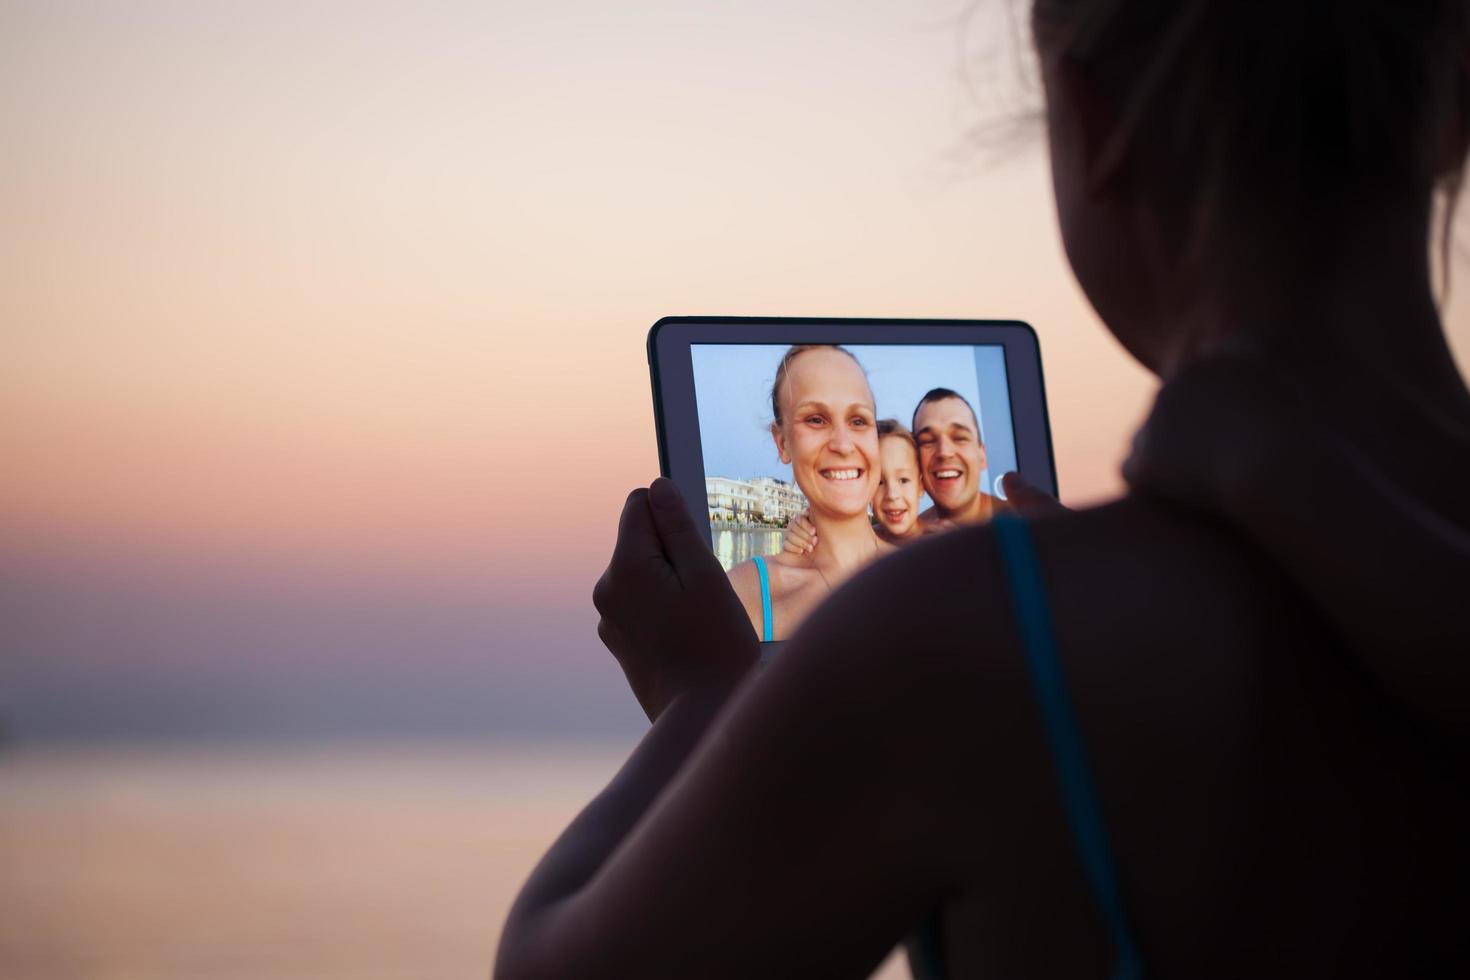 Family virtually connecting on a beach photo